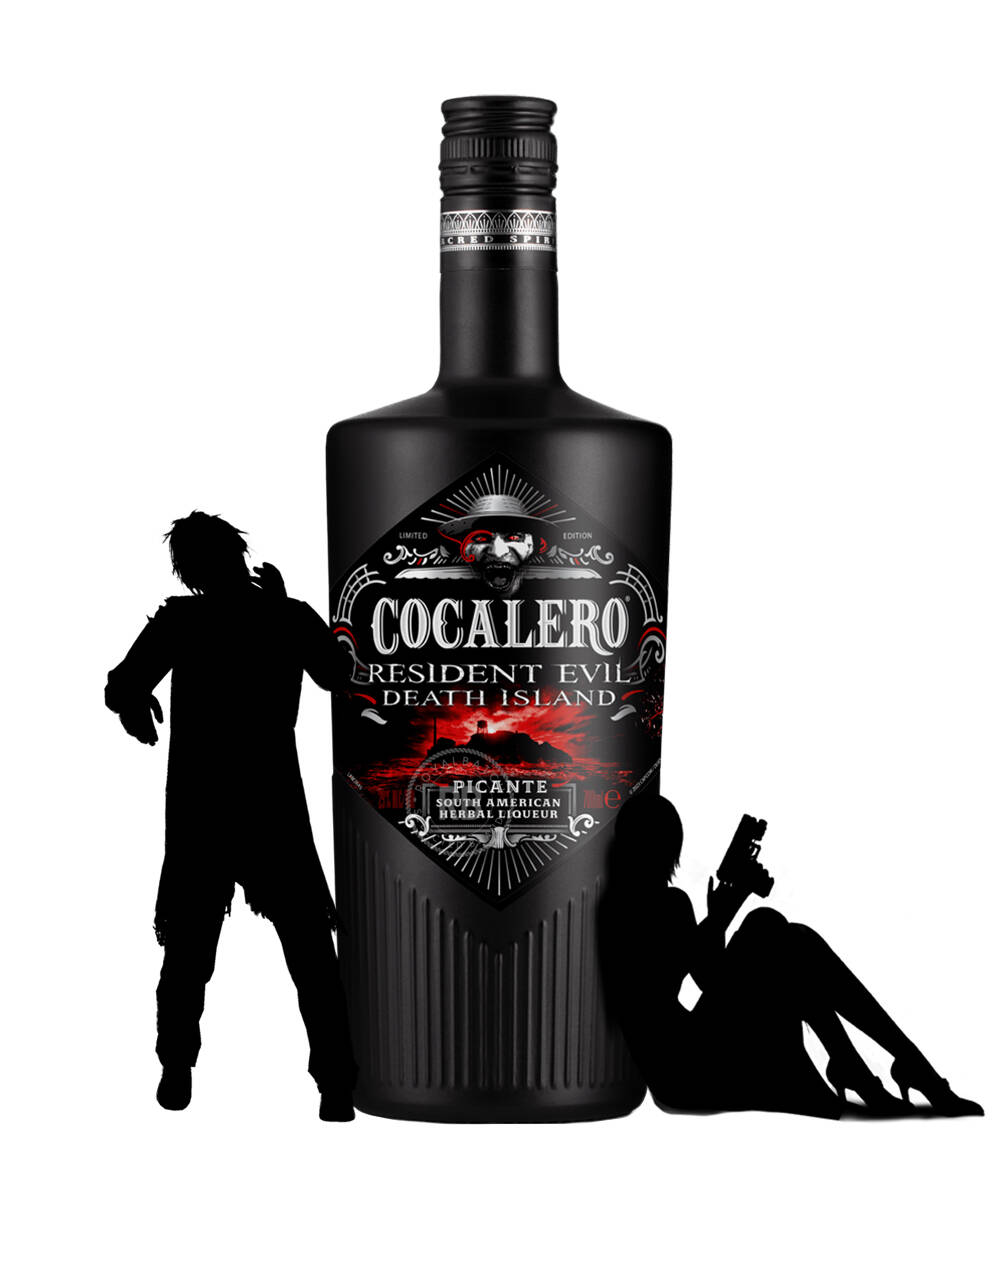 Cocalero x Resident Evil Death Island Picante Herbal Liqueur